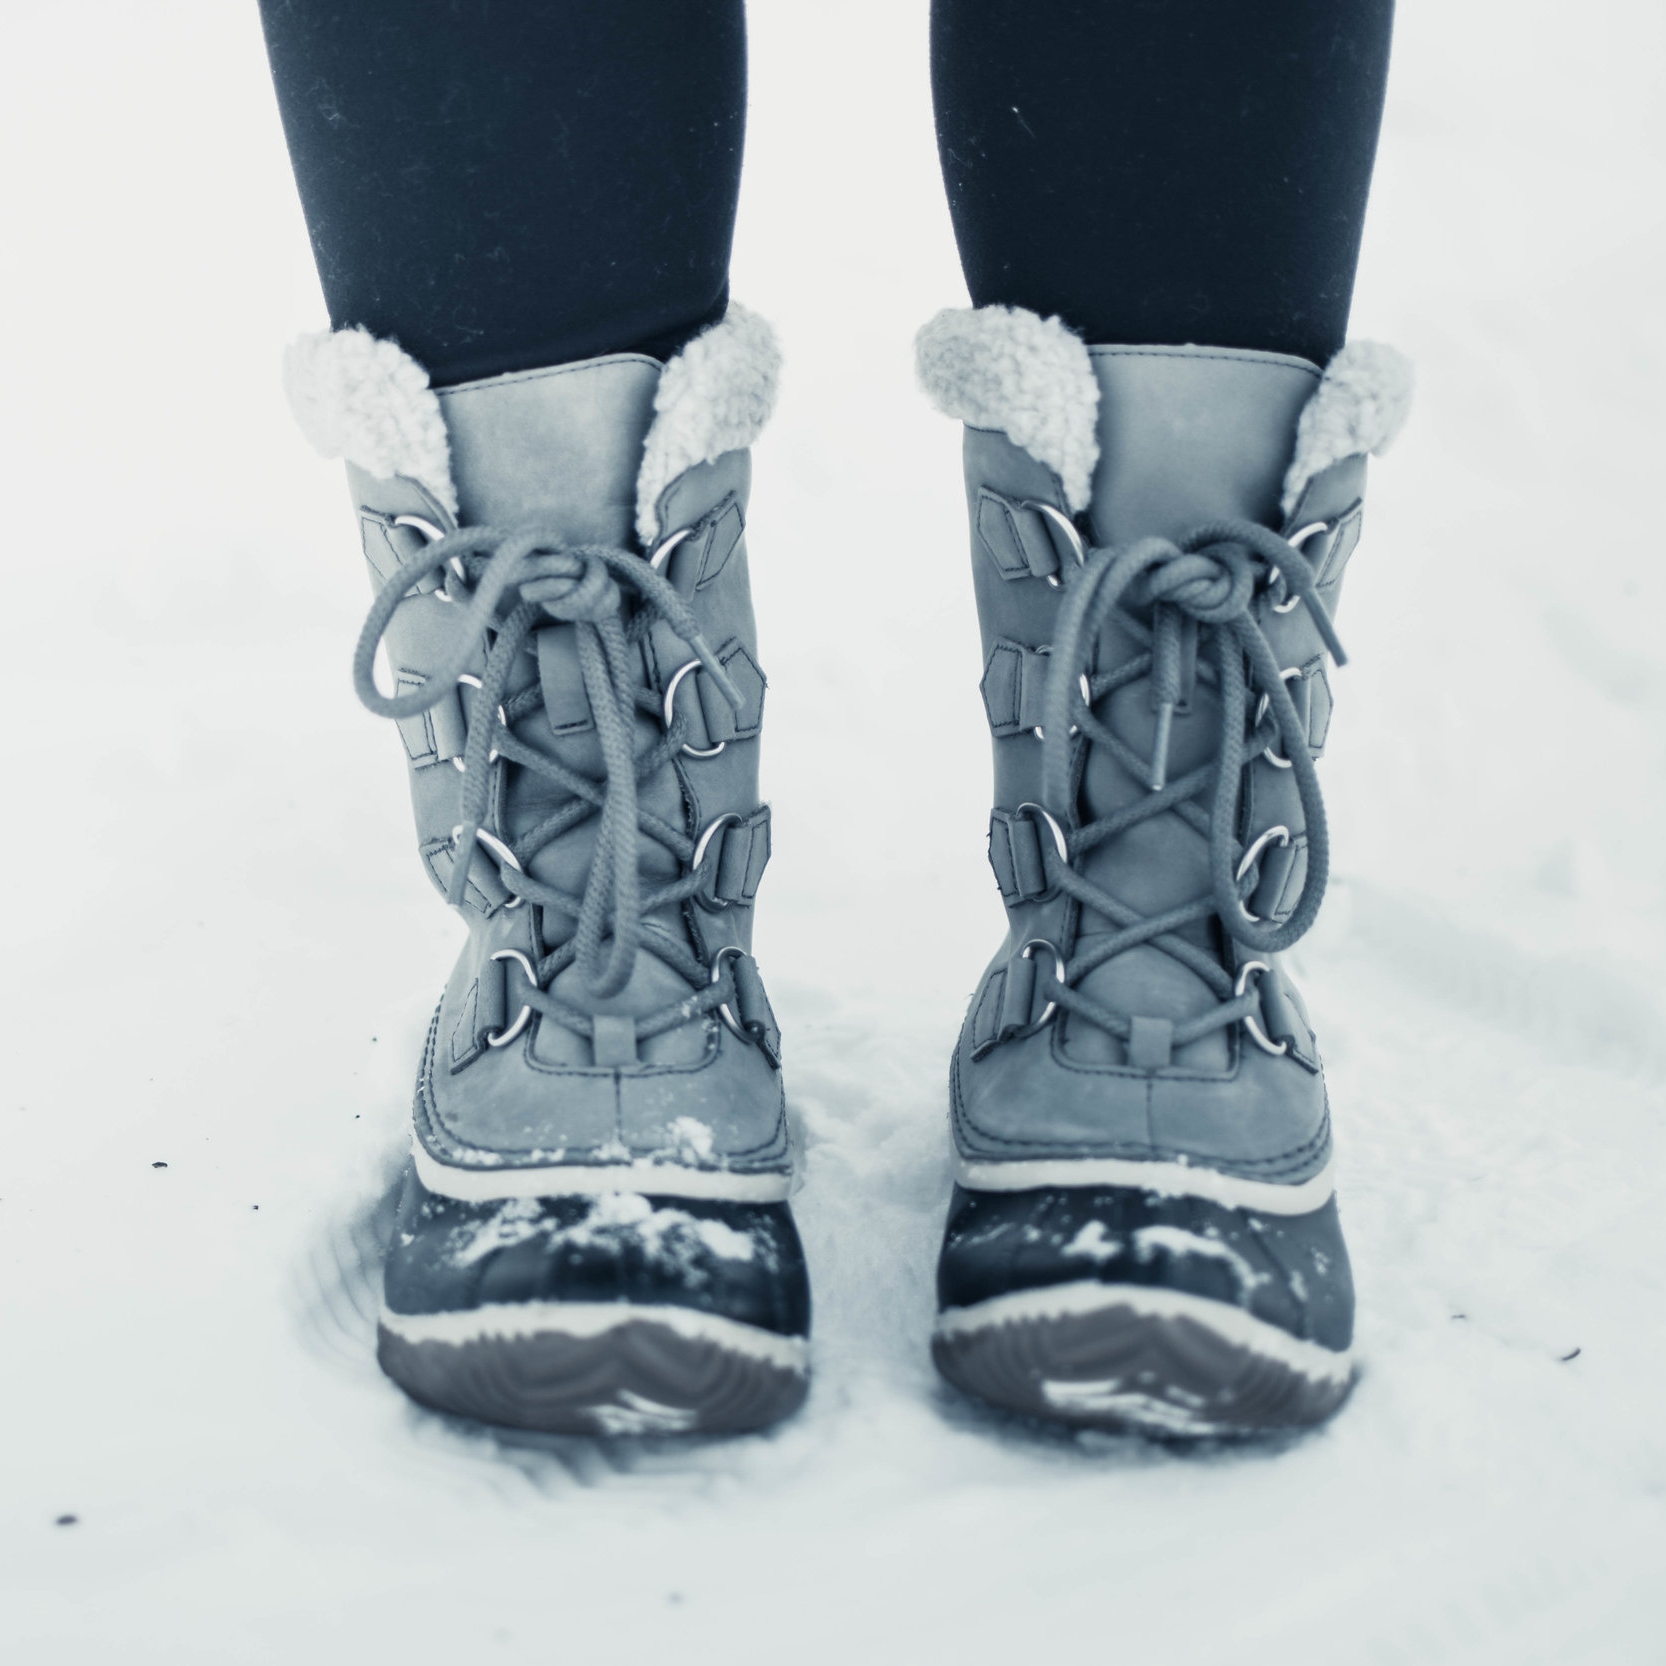 sorel women's caribou slim boots